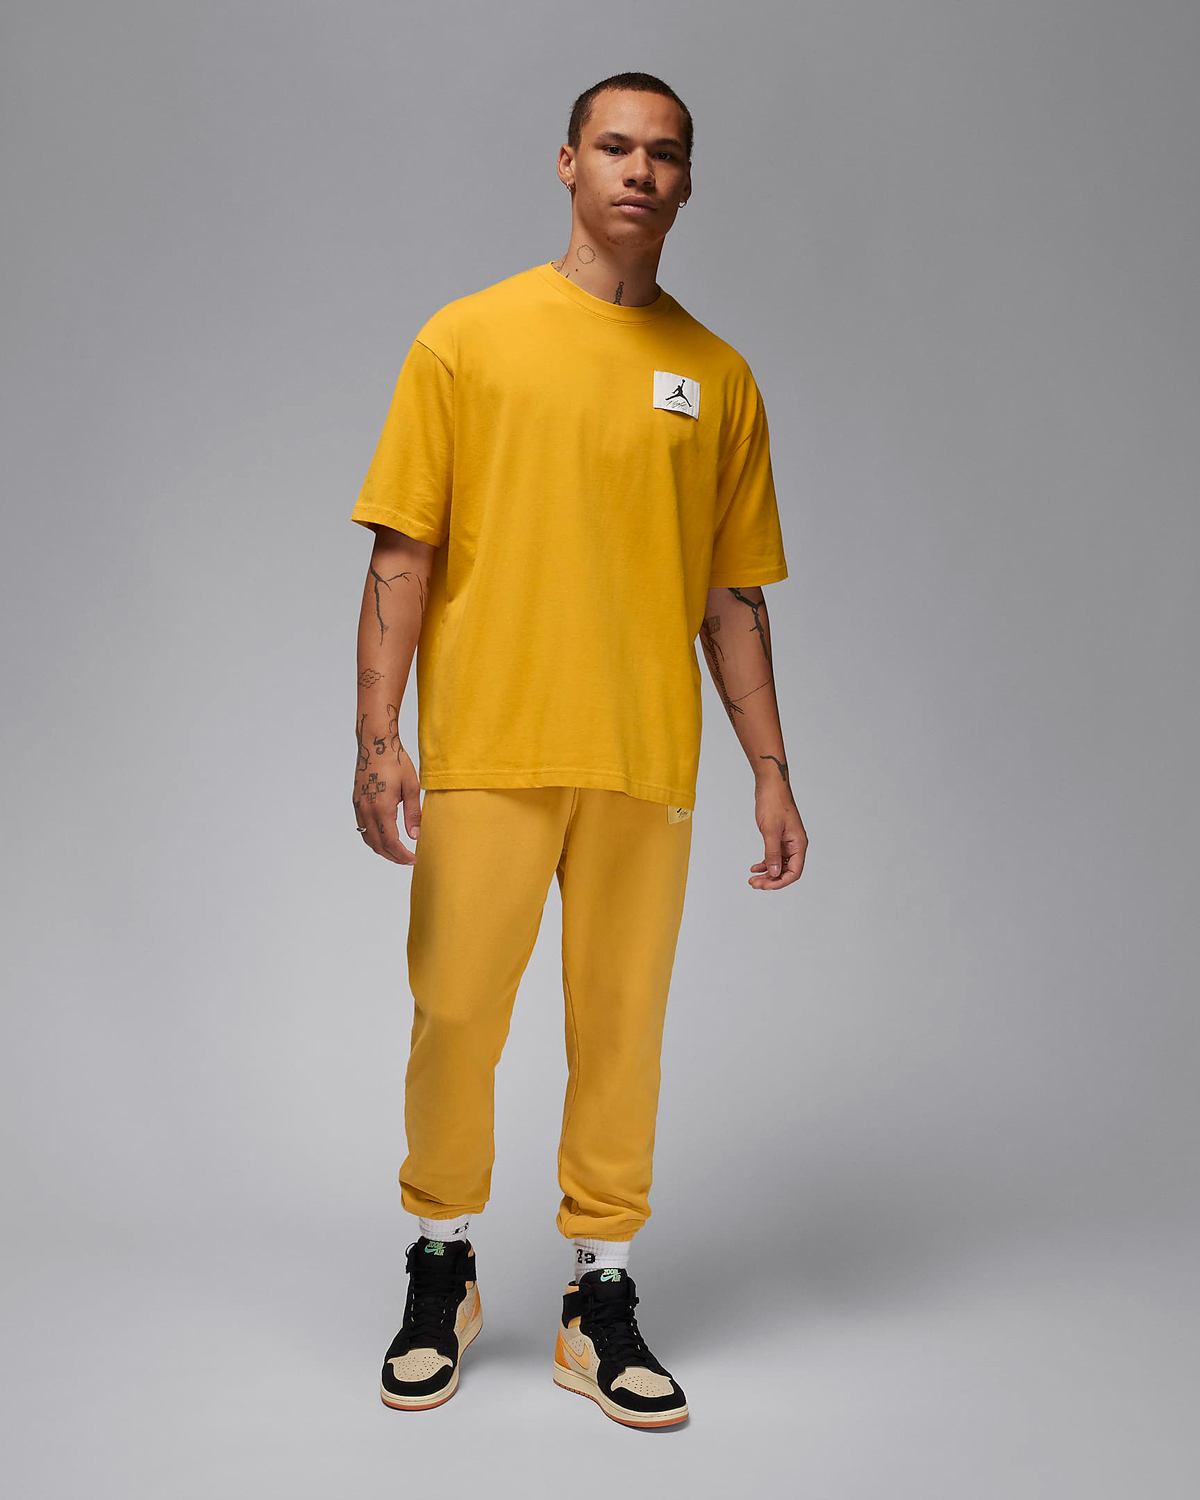 Air Jordan 1 Low Yellow Ochre Shirts Clothing Outfits